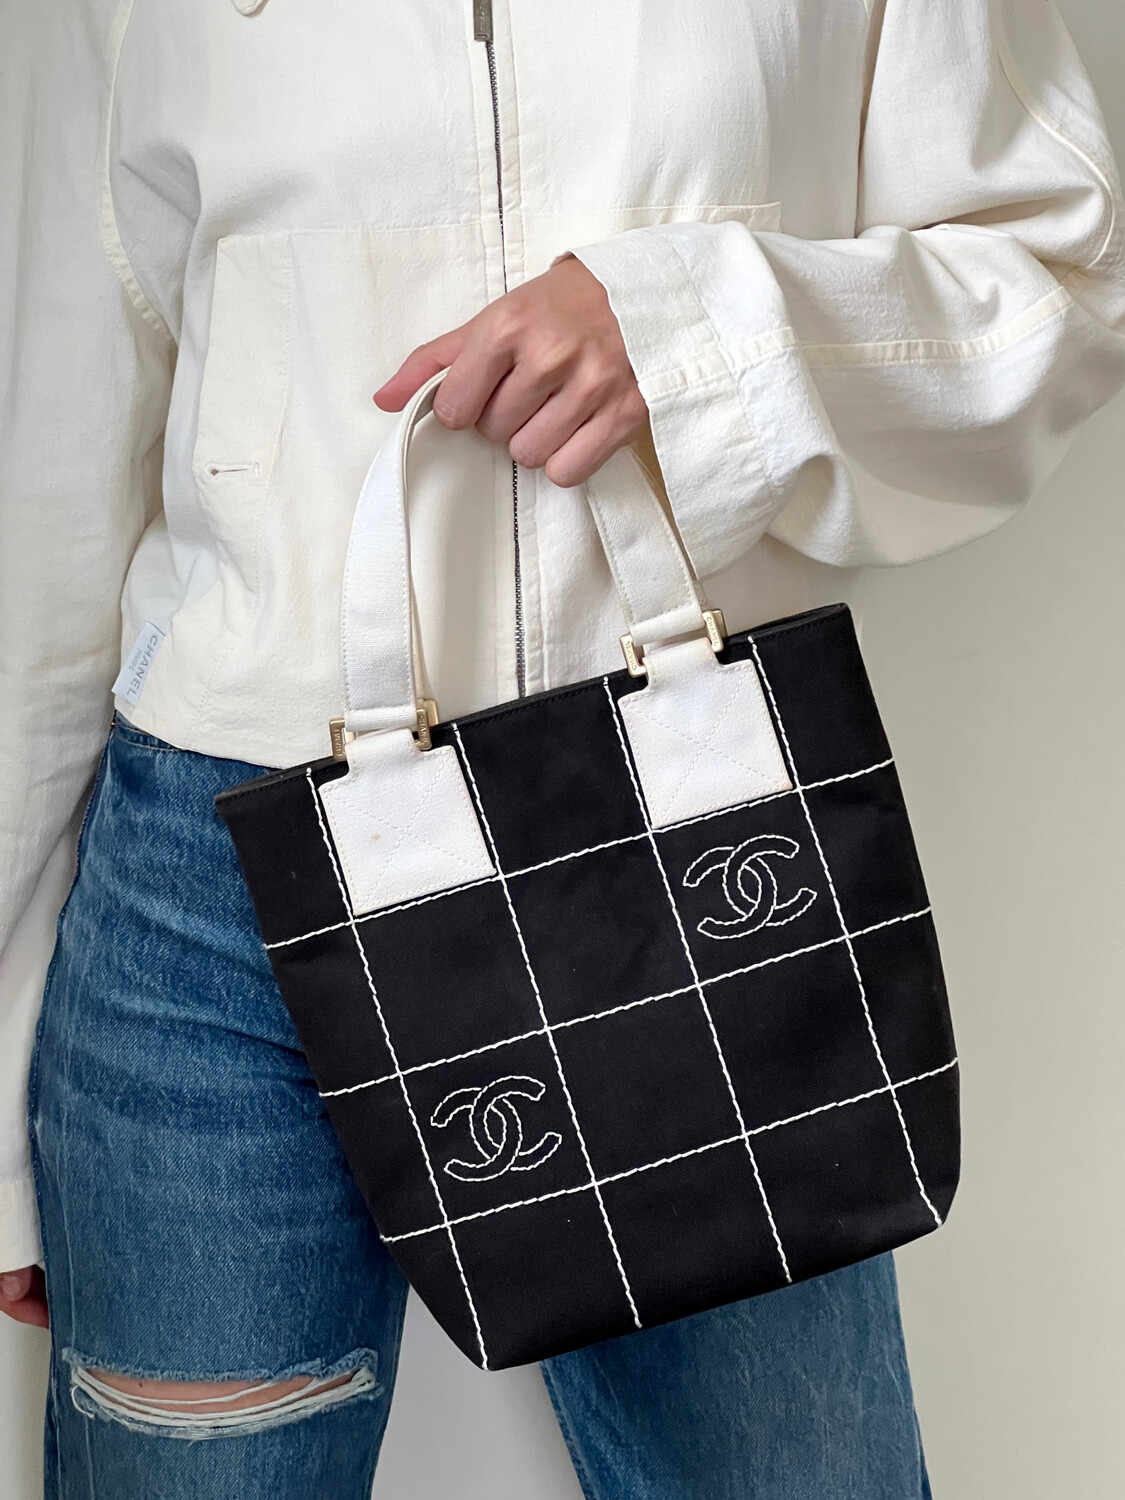 black chanel handbag with white logo